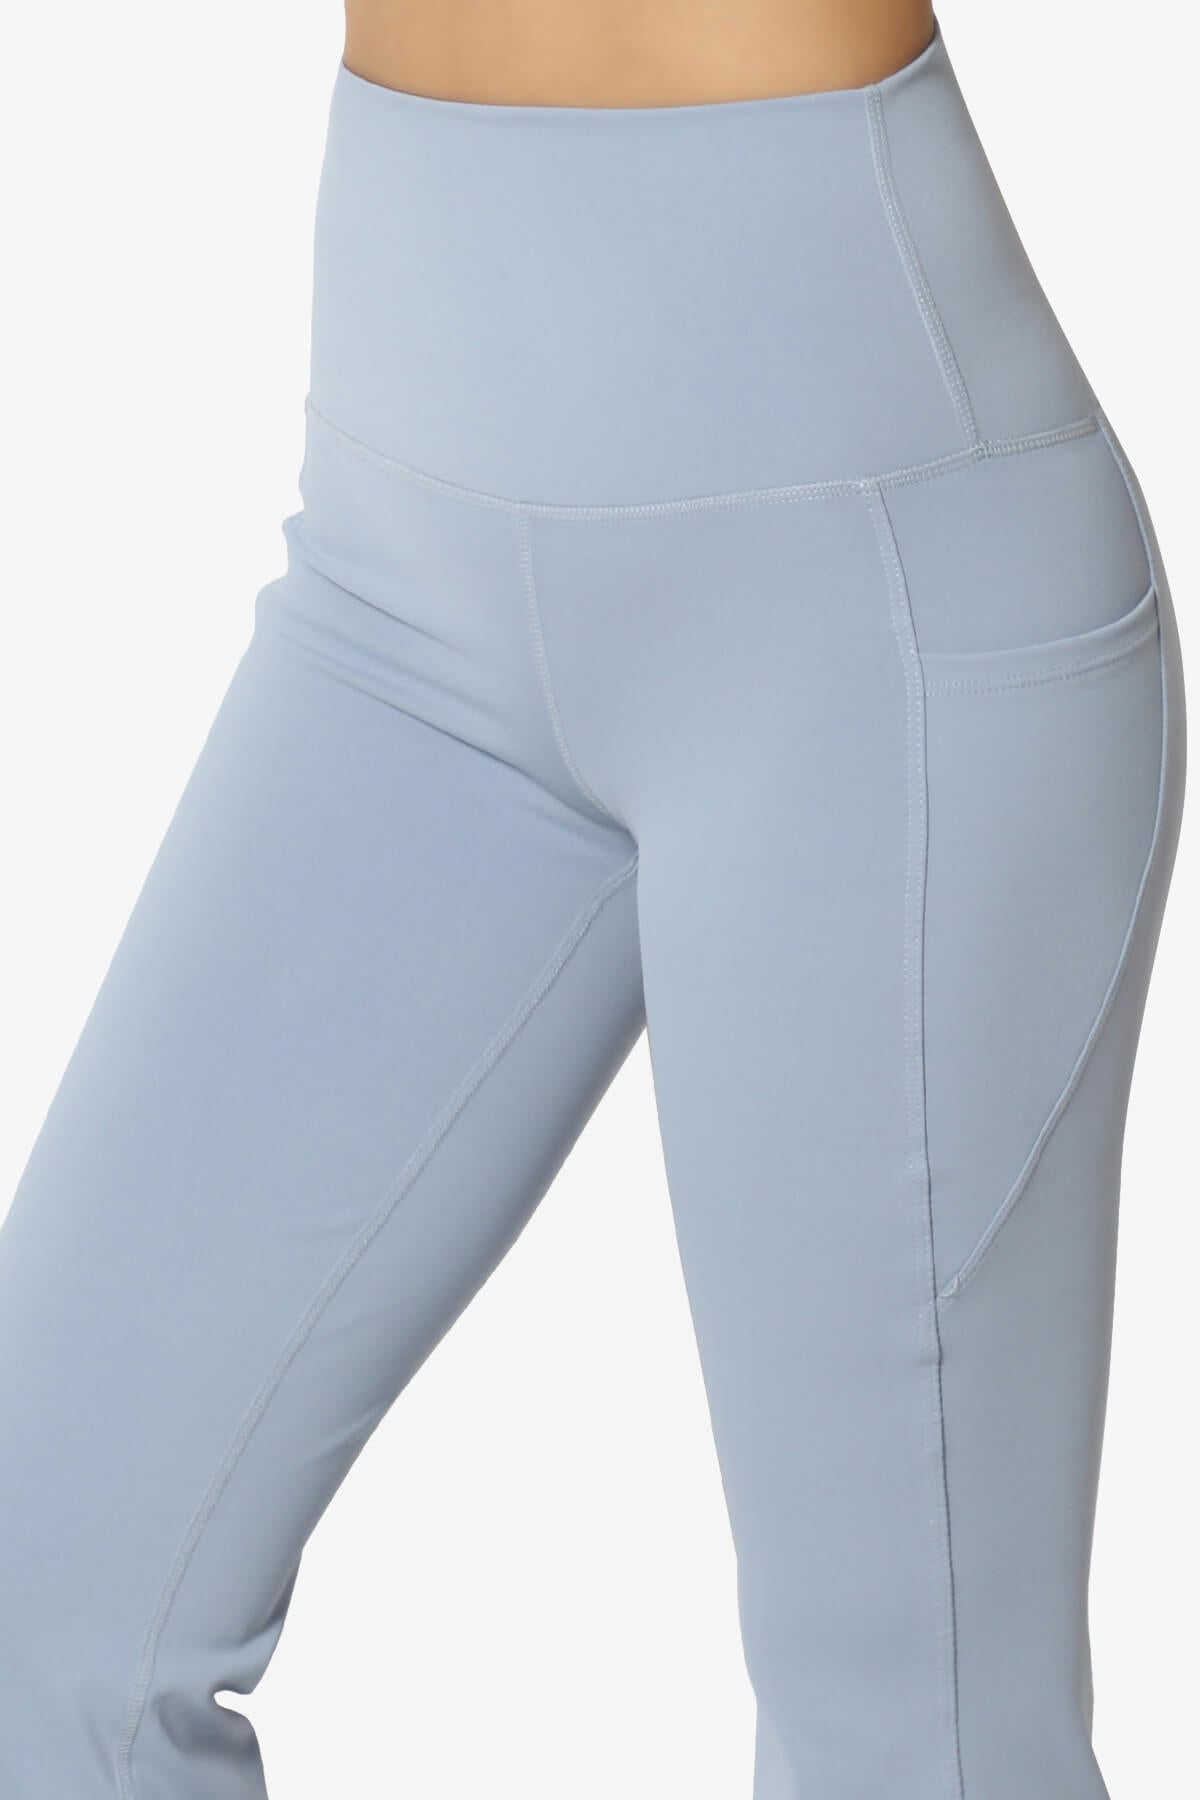 Avia Women's Plus Size Crossover Waist Flare Yoga Pants